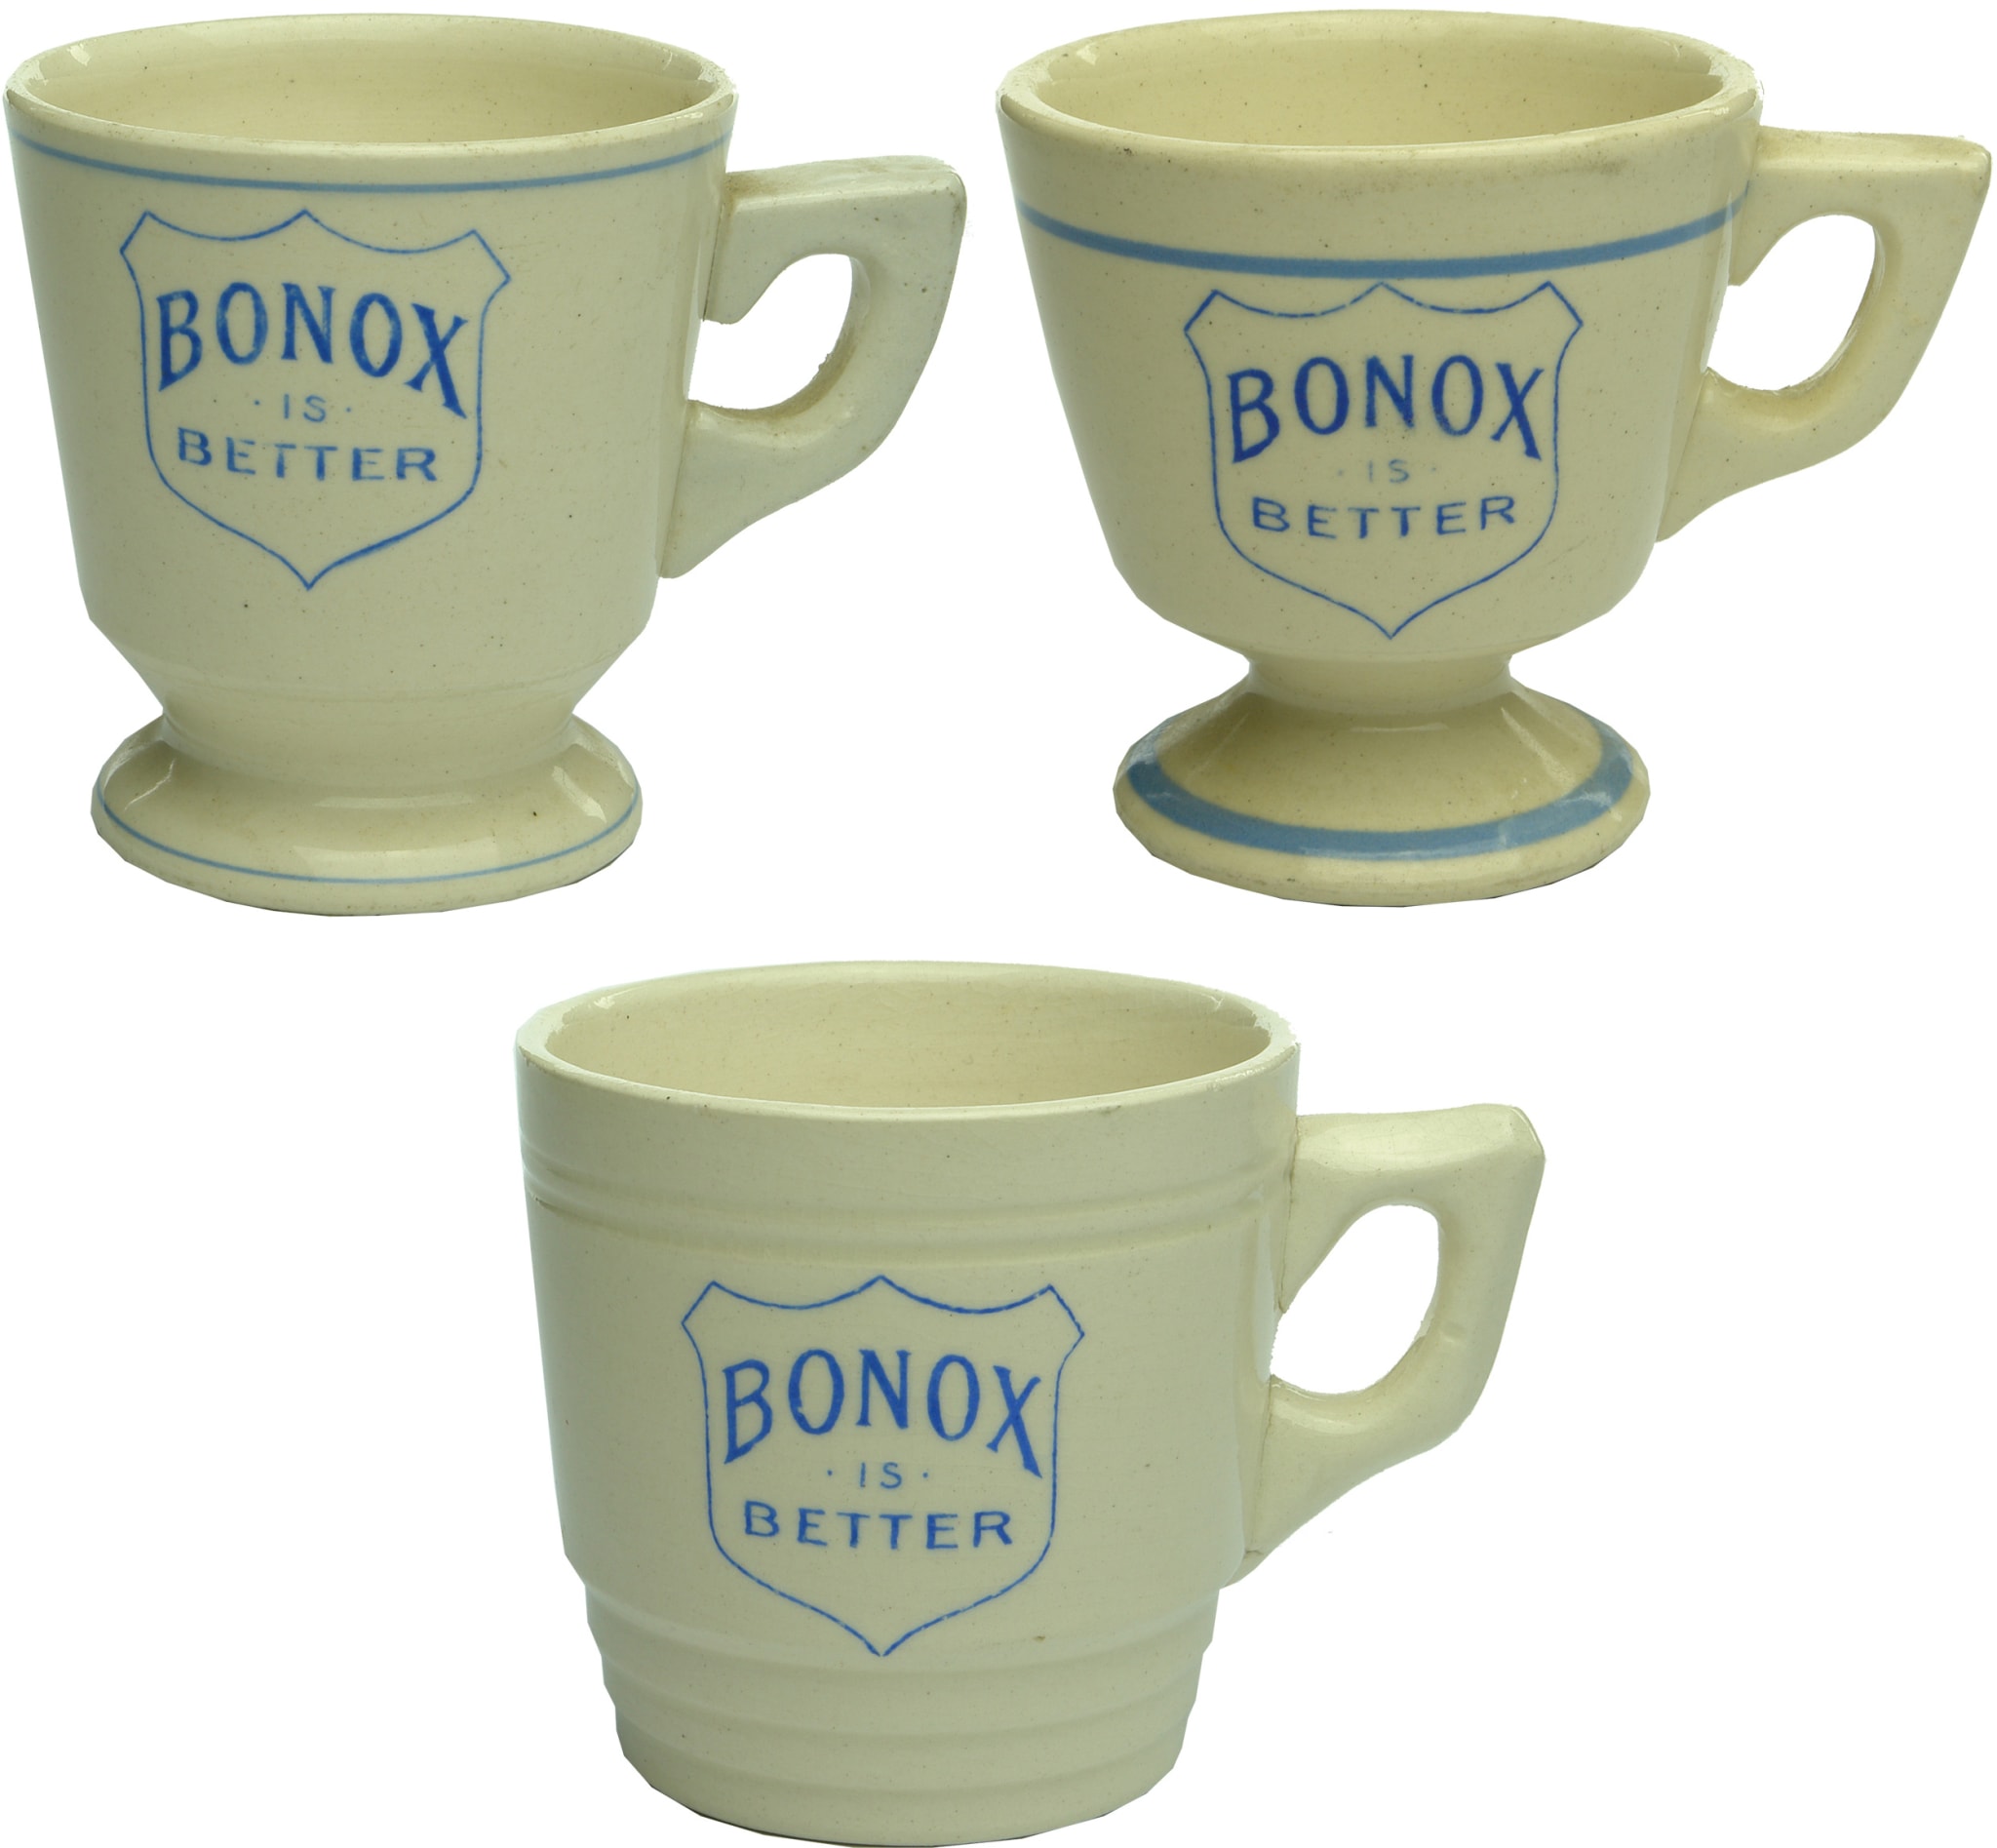 Bonox Advertising Ceramic Mugs